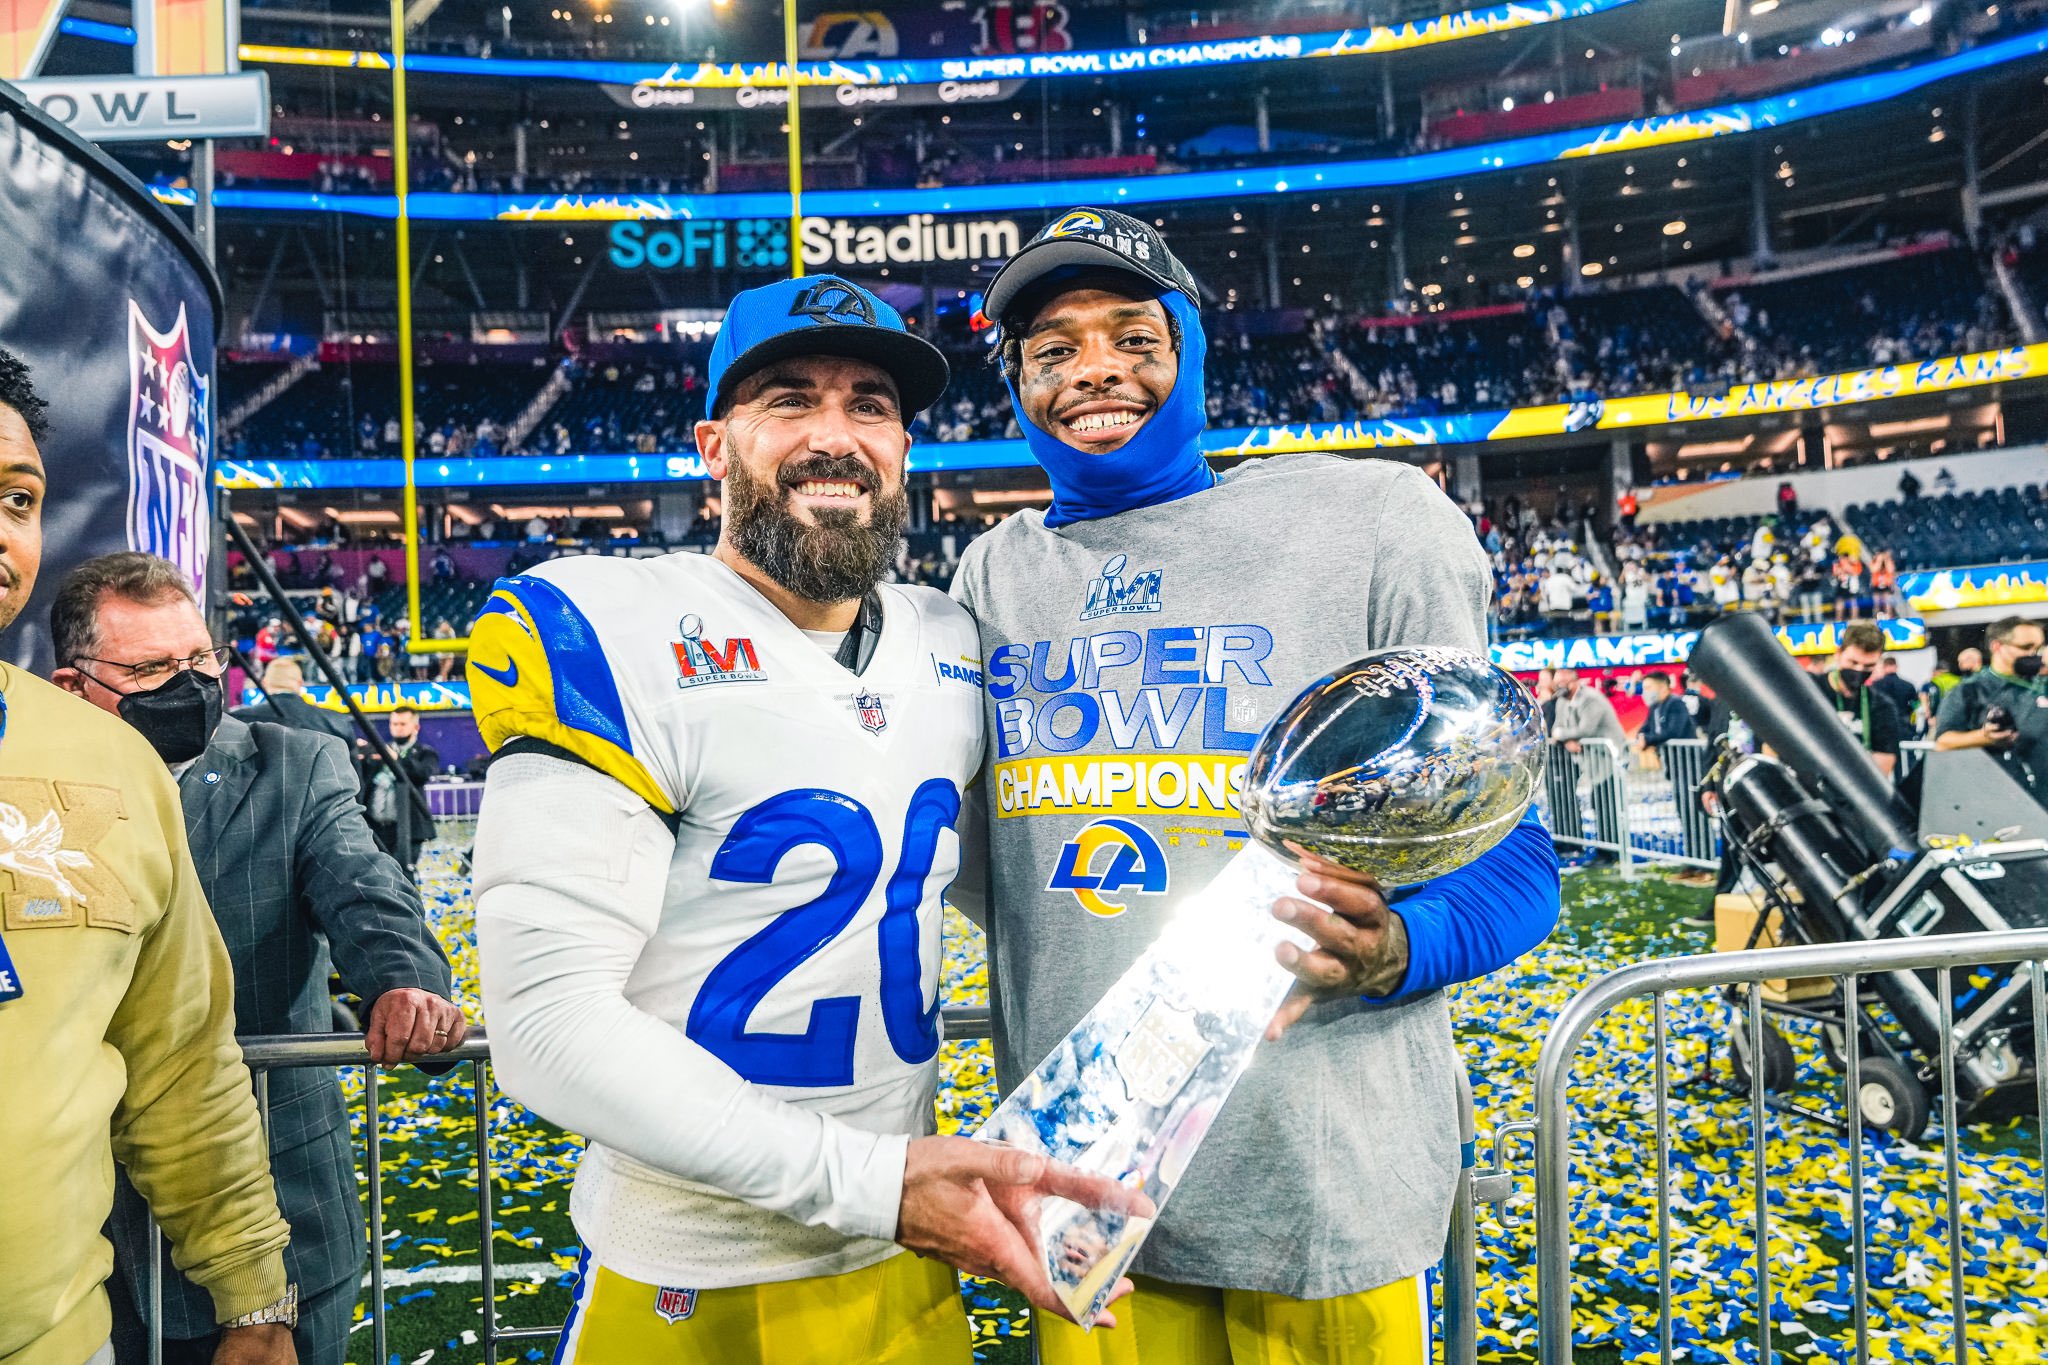 2022 NFL Super Bowl Winner: Los Angeles Rams Register 23-20 Win Over  Cincinnati Bengals, Watch Video Highlights